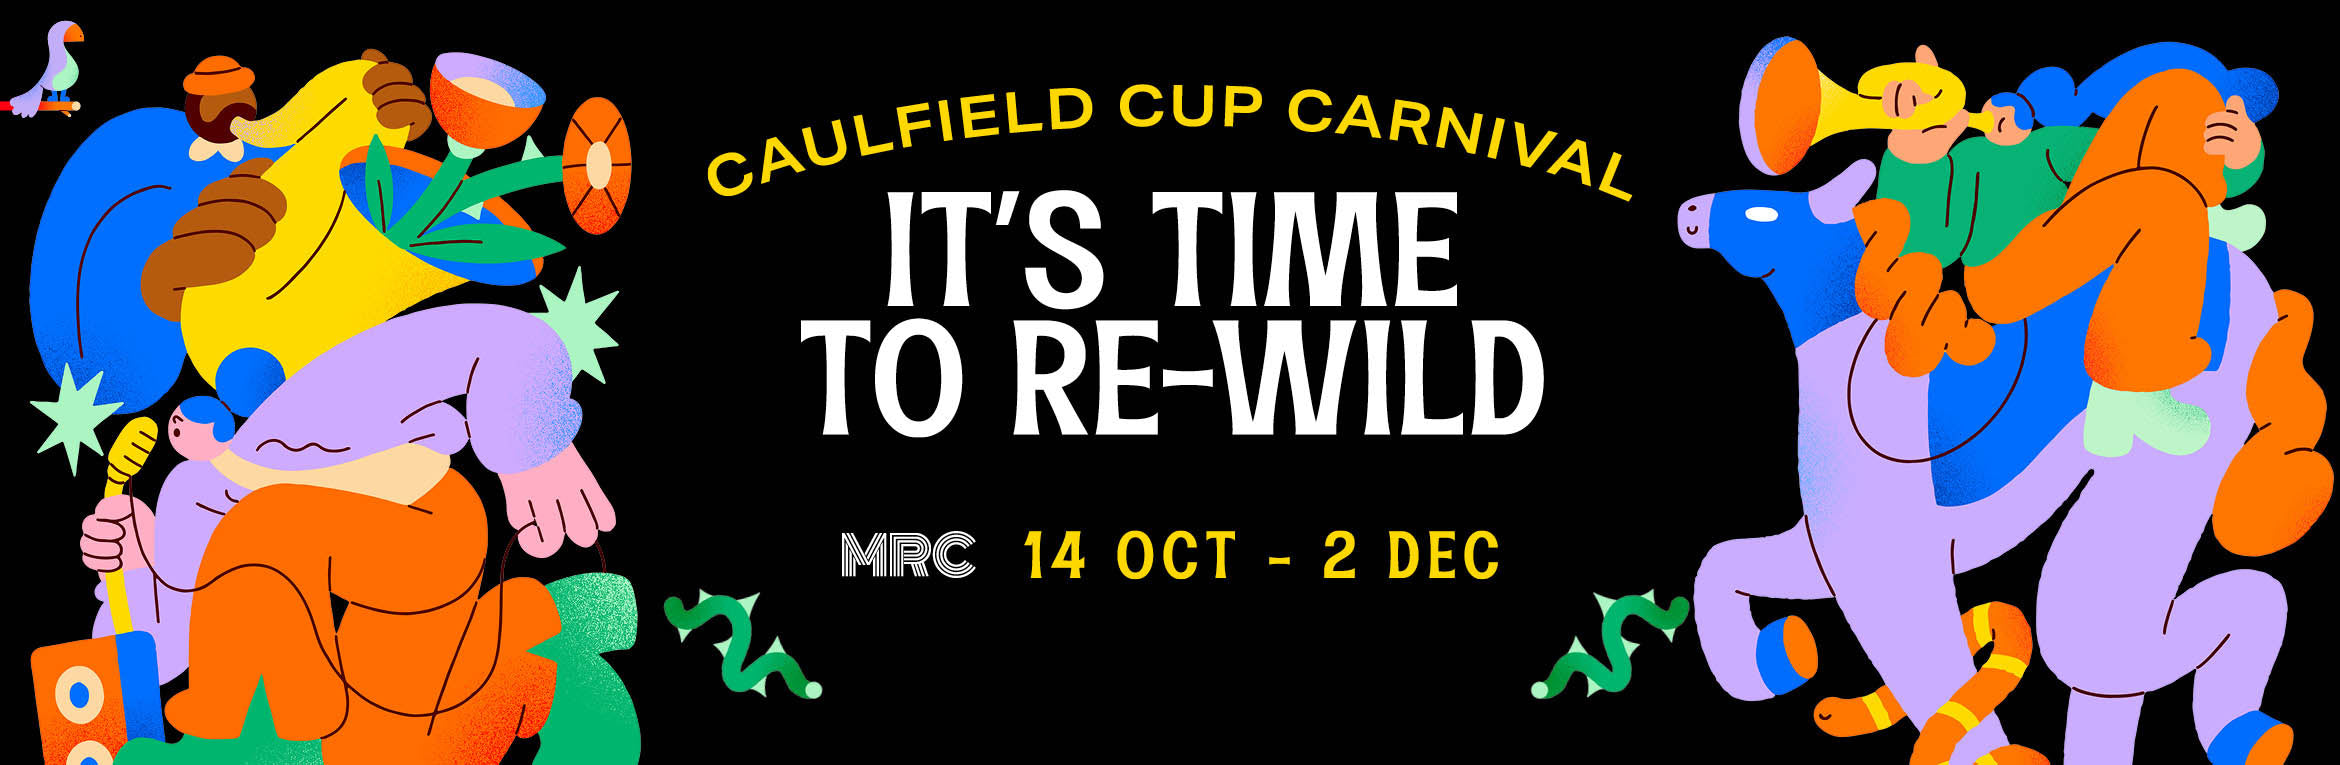 Caulfield Cup Carnival